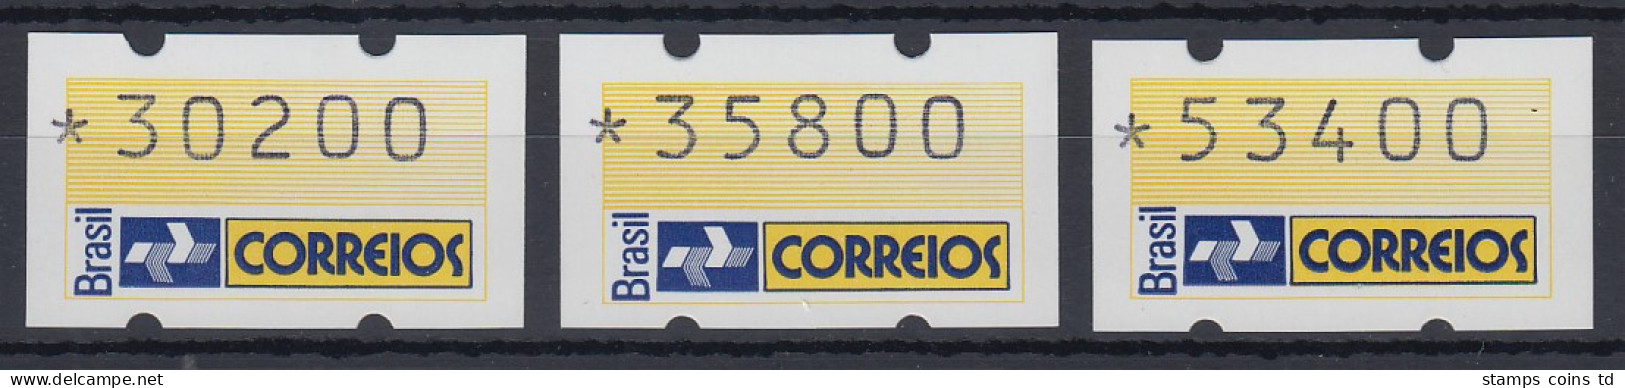 Brasilien Klüssendorf-ATM 1993 Postemblem Mi-Nr 4 Satz 30200 - 35800 - 53400 ** - Automatenmarken (Frama)